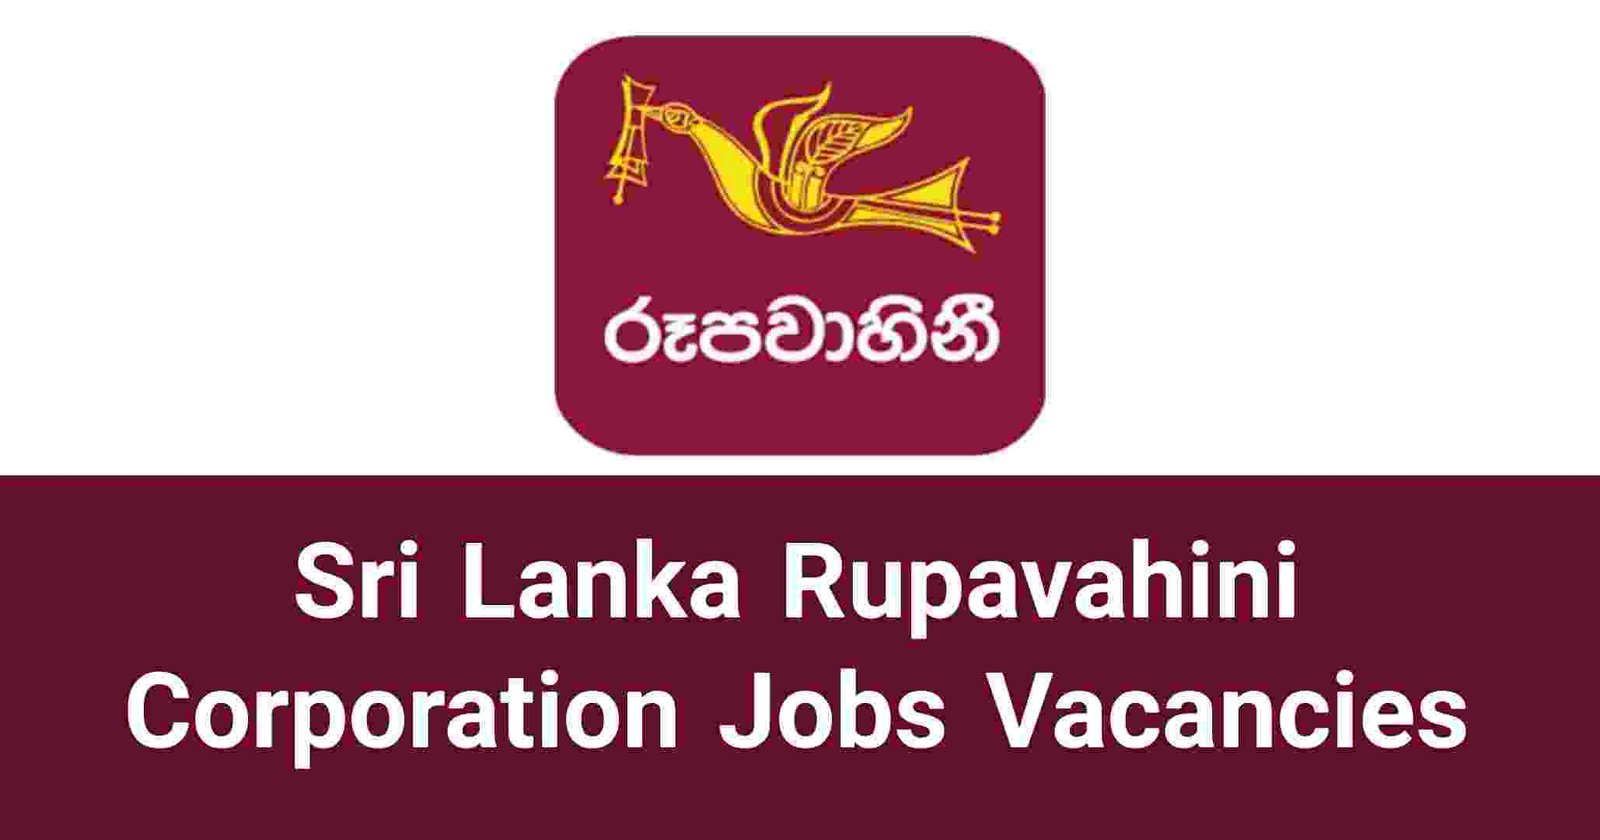 Sri Lanka Rupavahini Corporation Jobs Vacancies